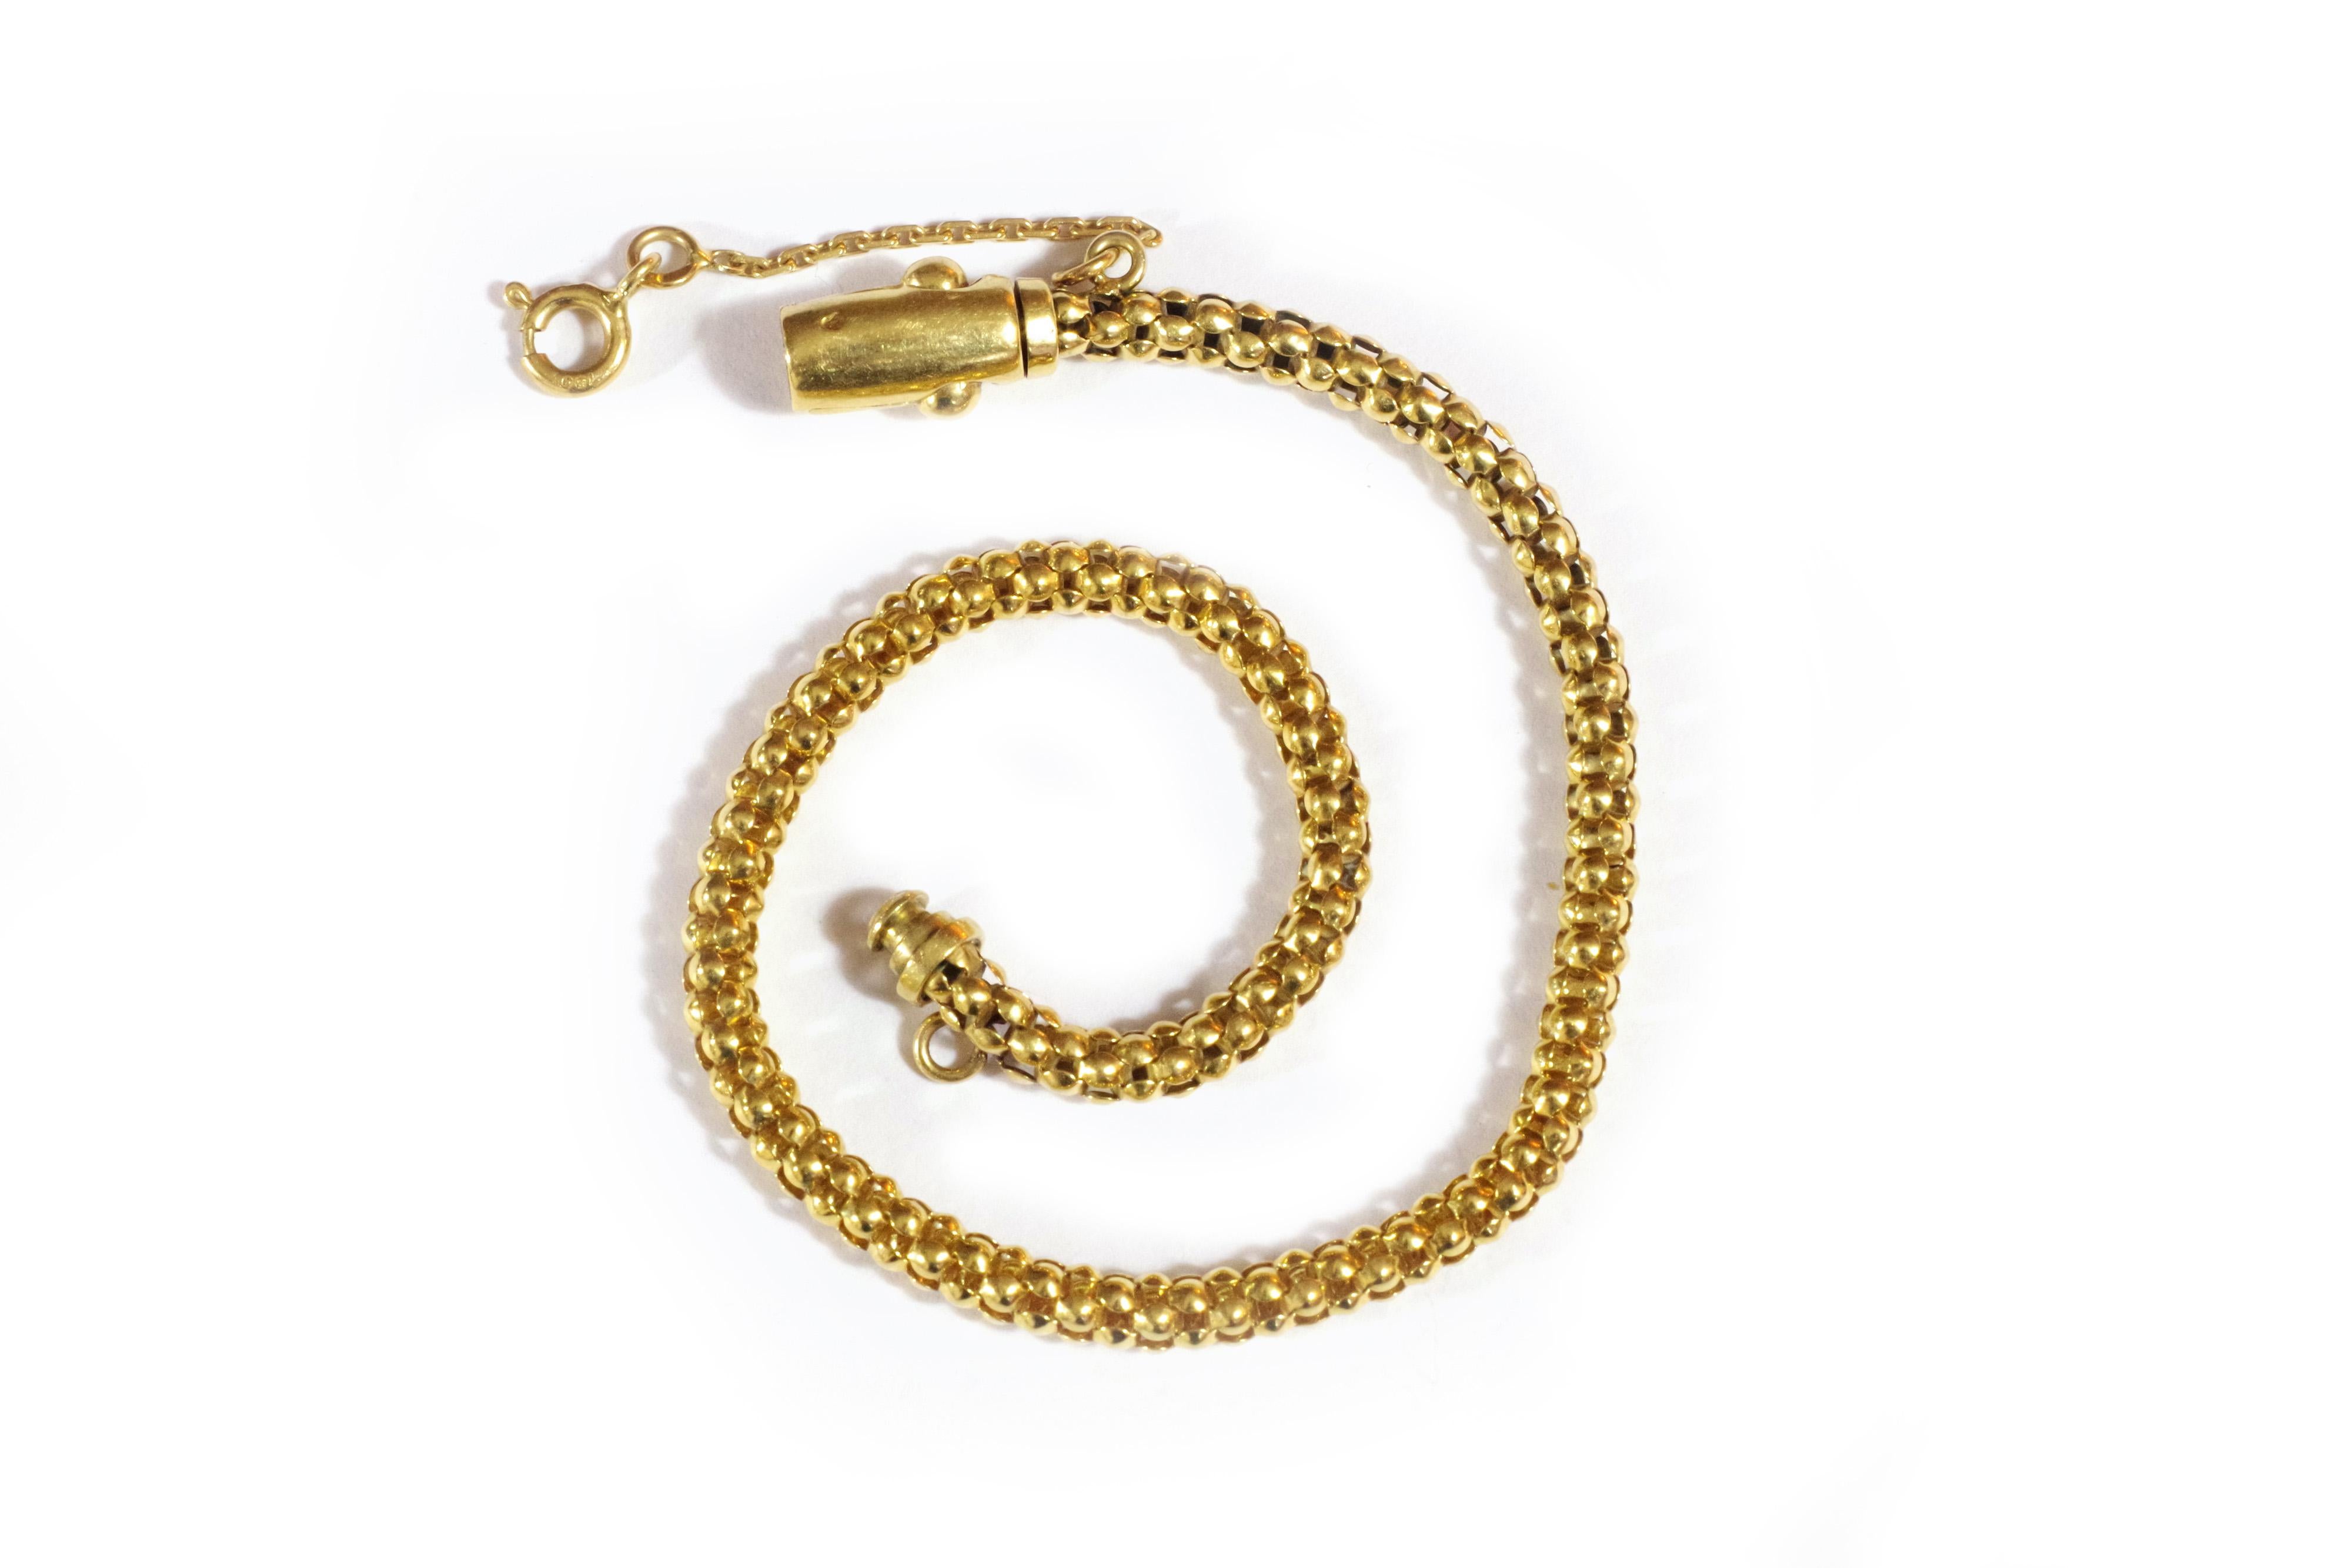 Contemporary Italian 18k Gold Bracelet, Flexible Mesh, Pre-Owed Gold Bracelet